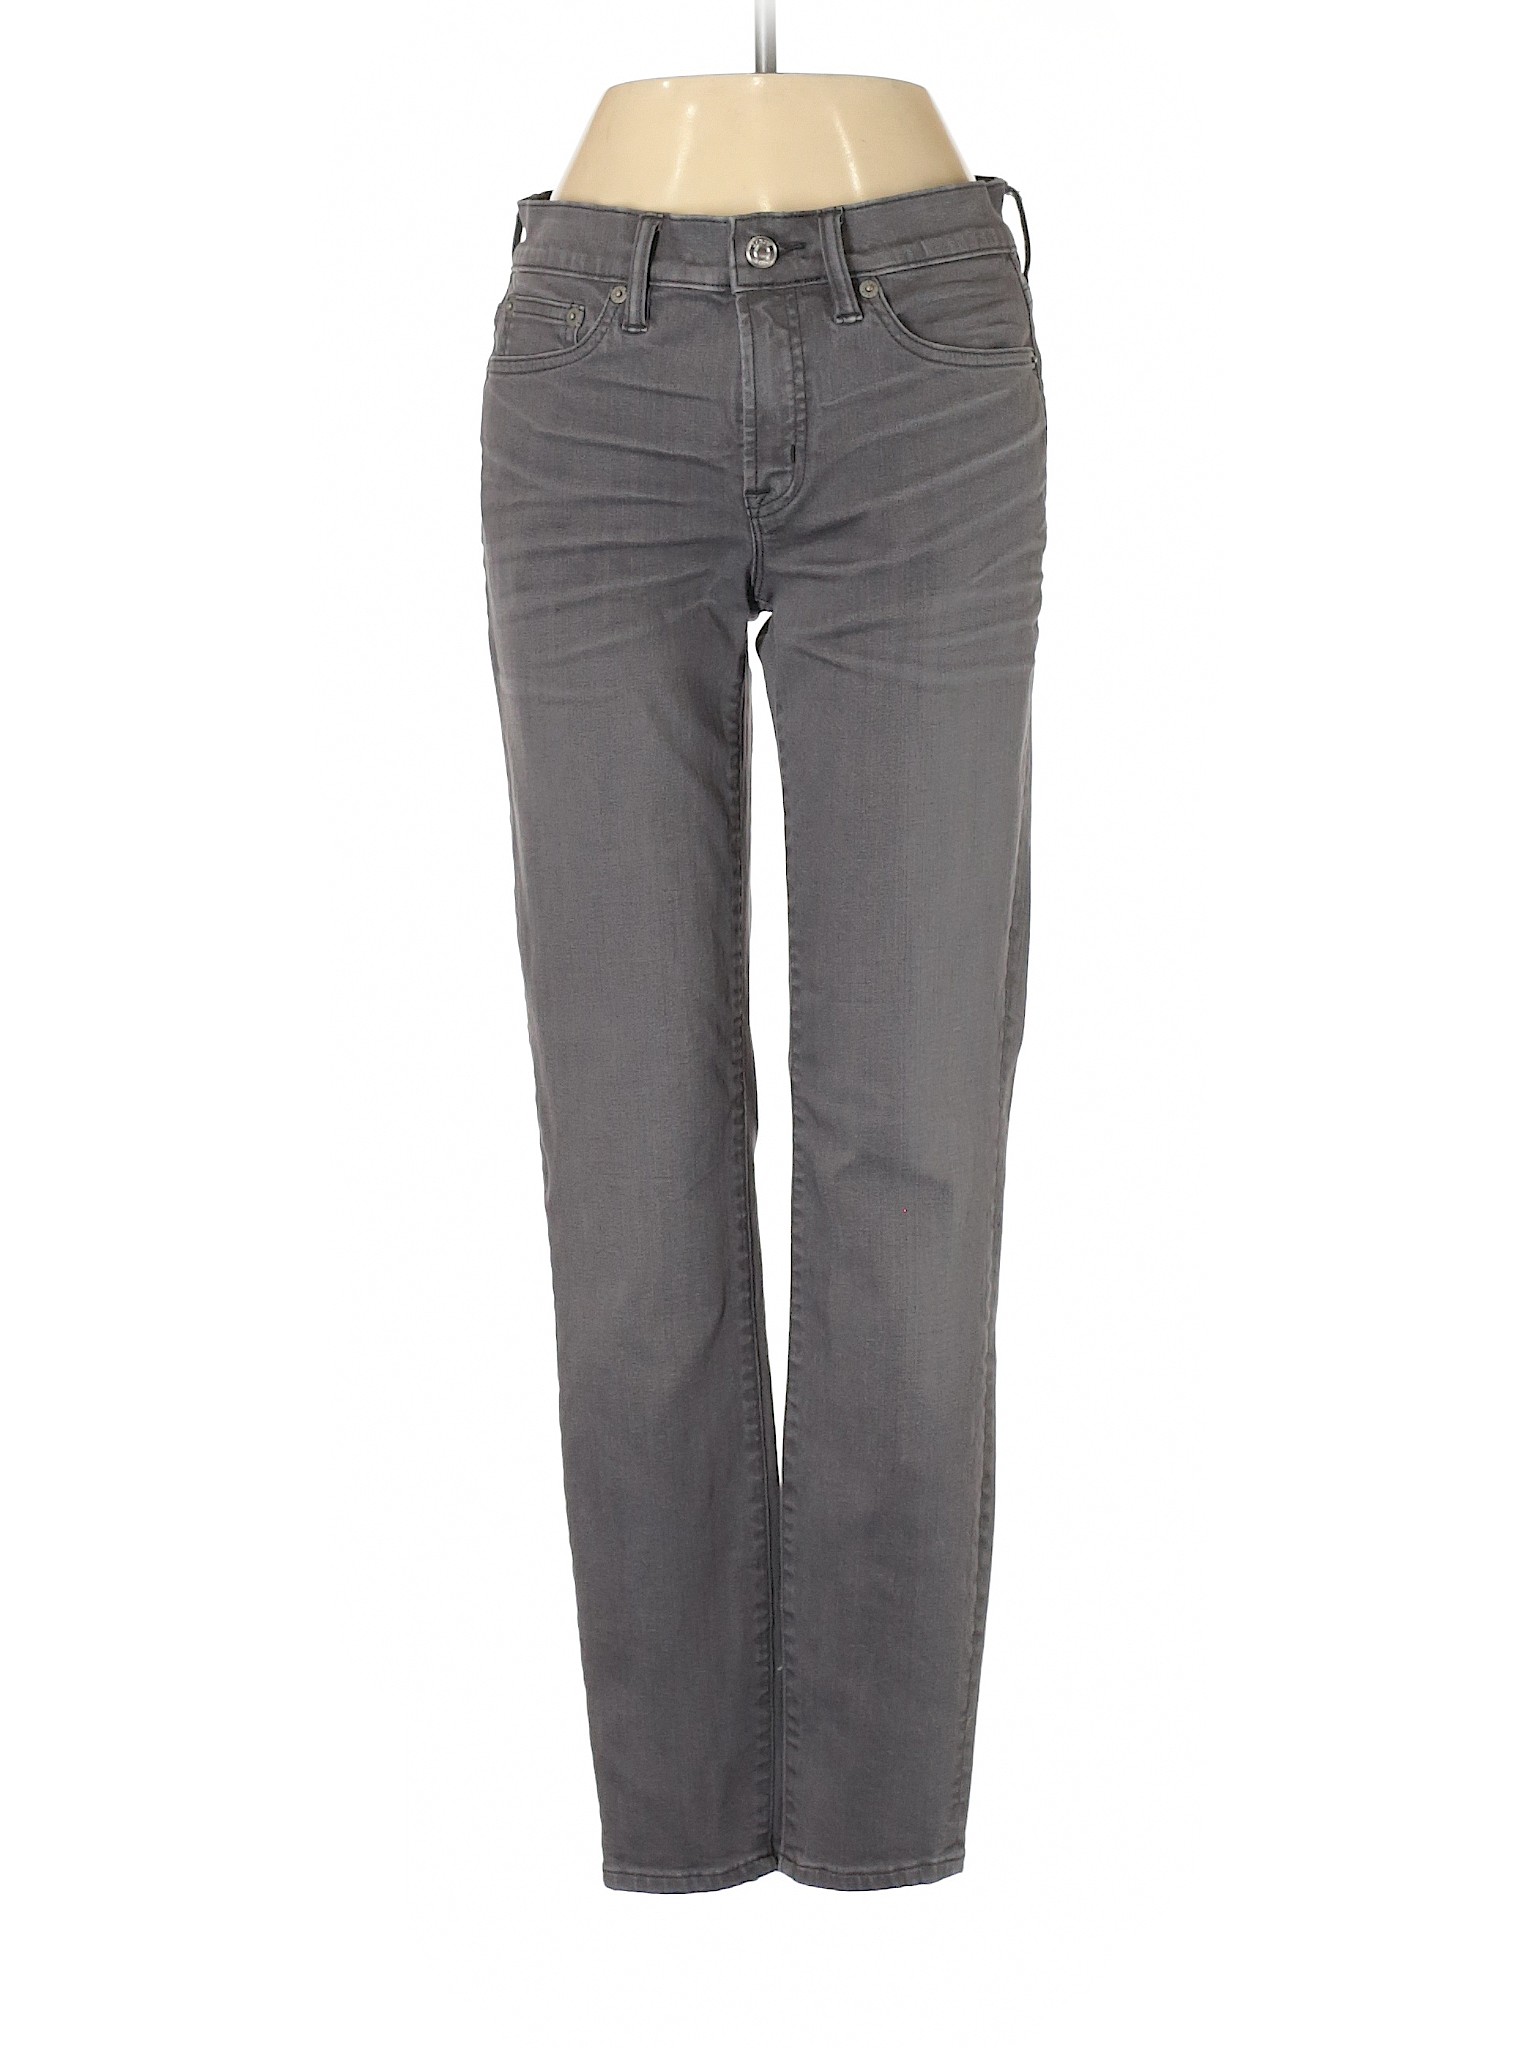 J.Crew Women Gray Jeans 27W | eBay